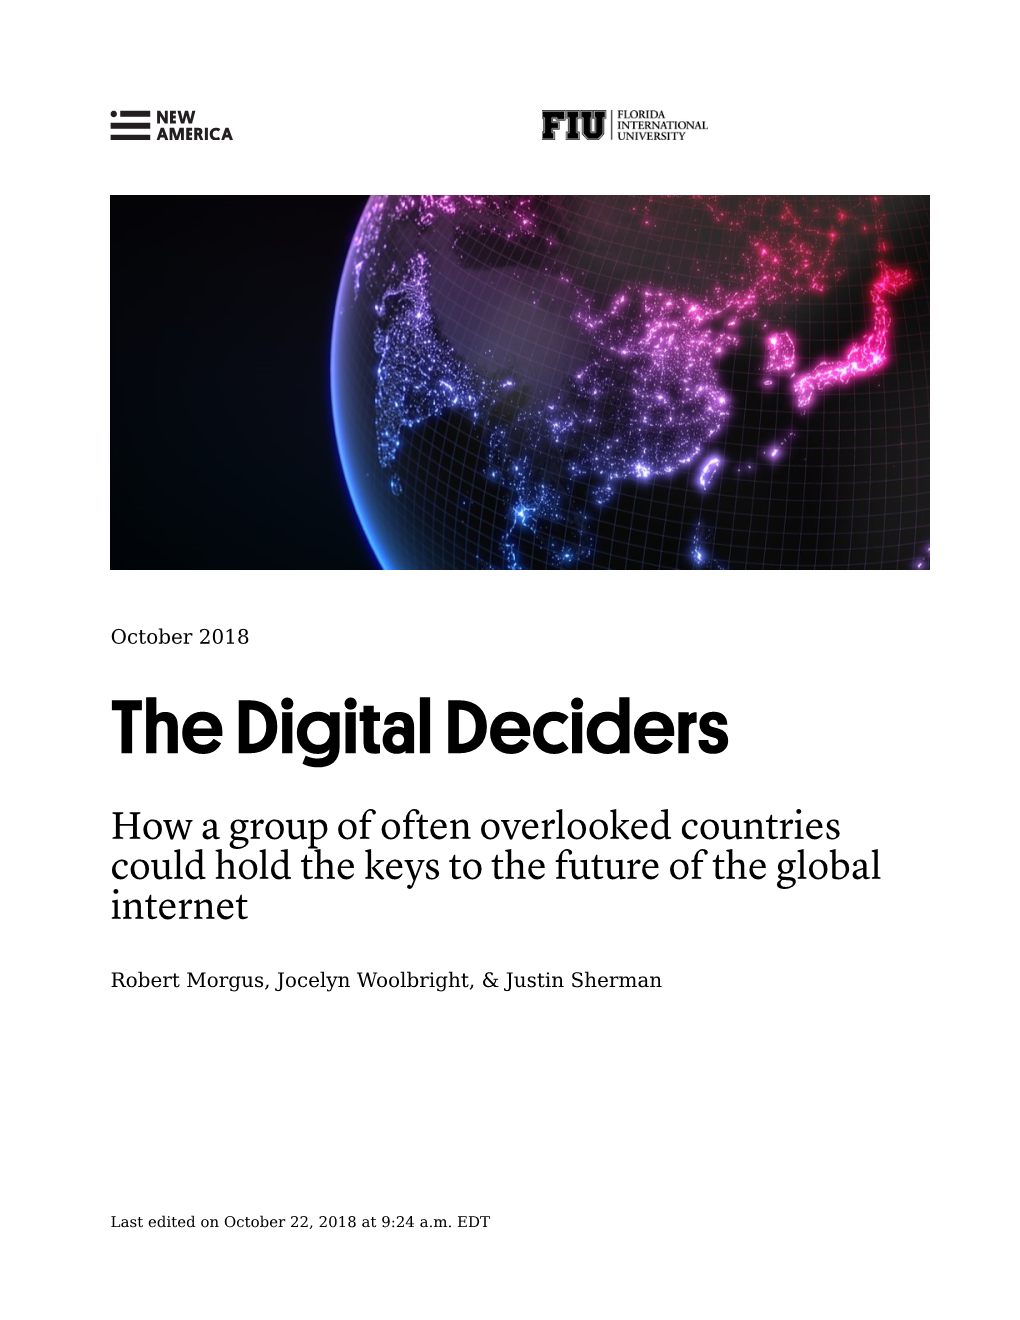 The Digital Deciders